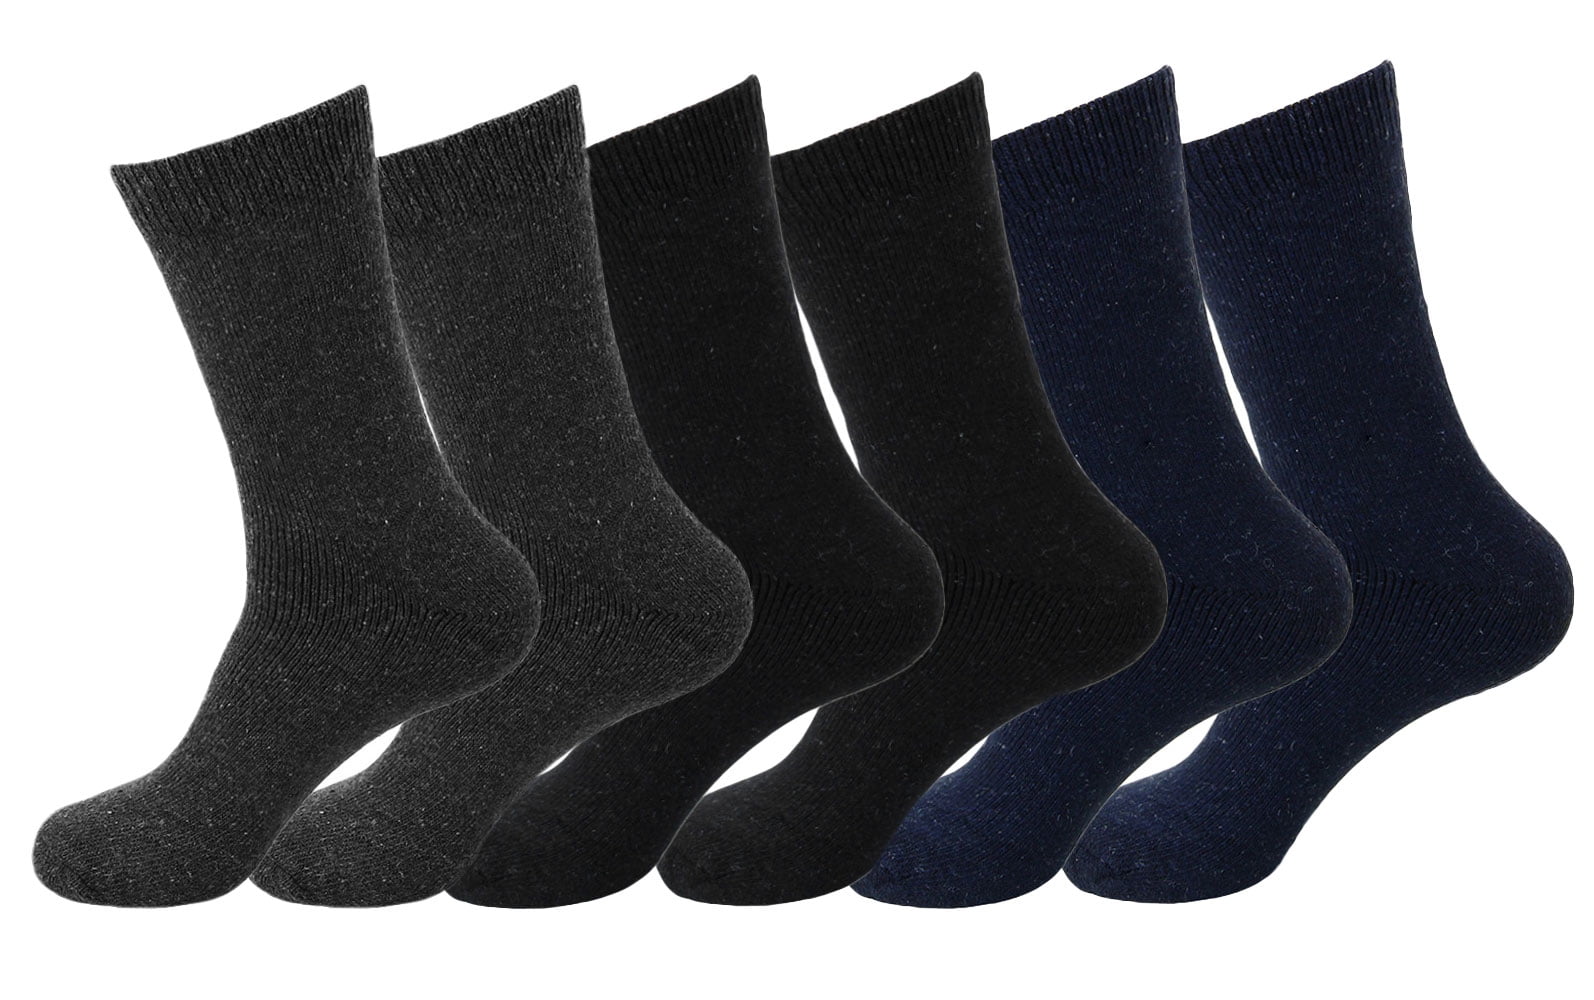 Warm Work Boot Socks By Heatwave®  Size 6-11 12 Pairs Men/'s Black Thermal Socks